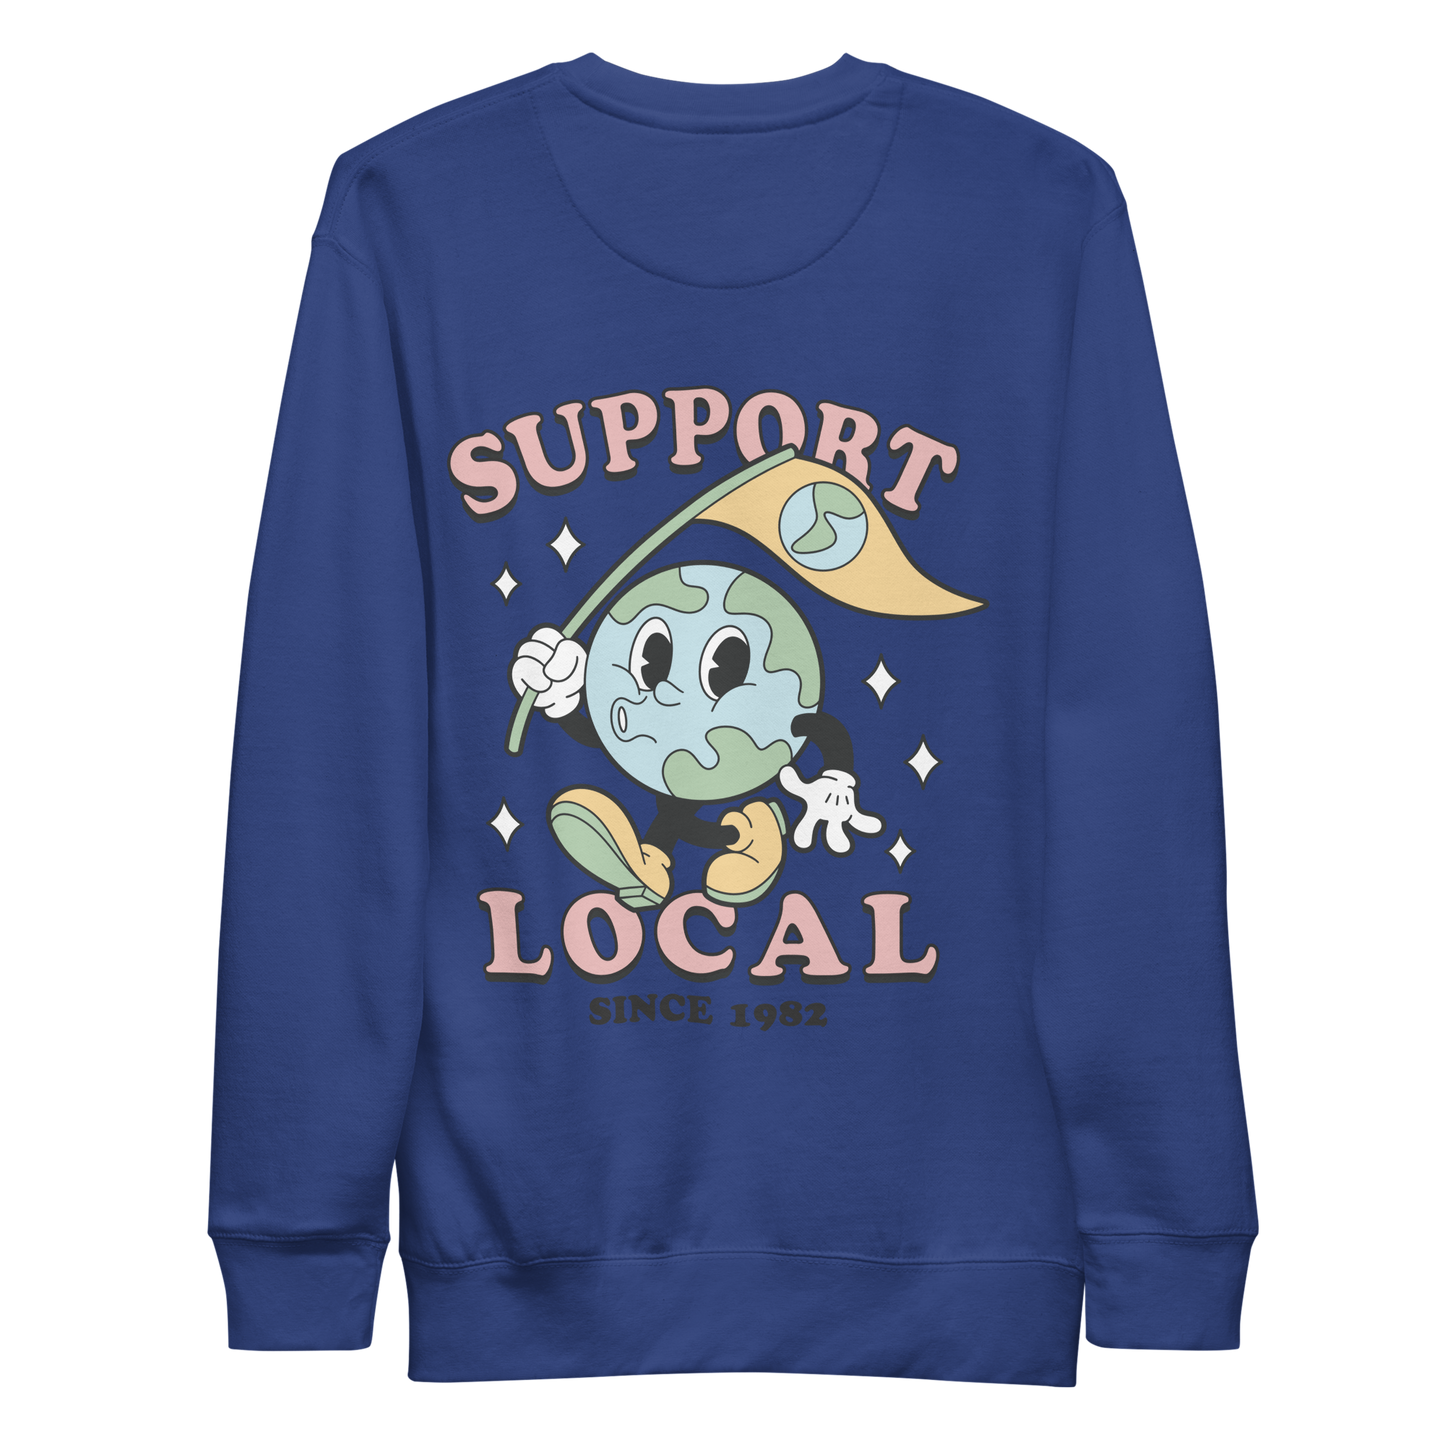 Happy planet earth | Unisex Premium Sweatshirt - F&B